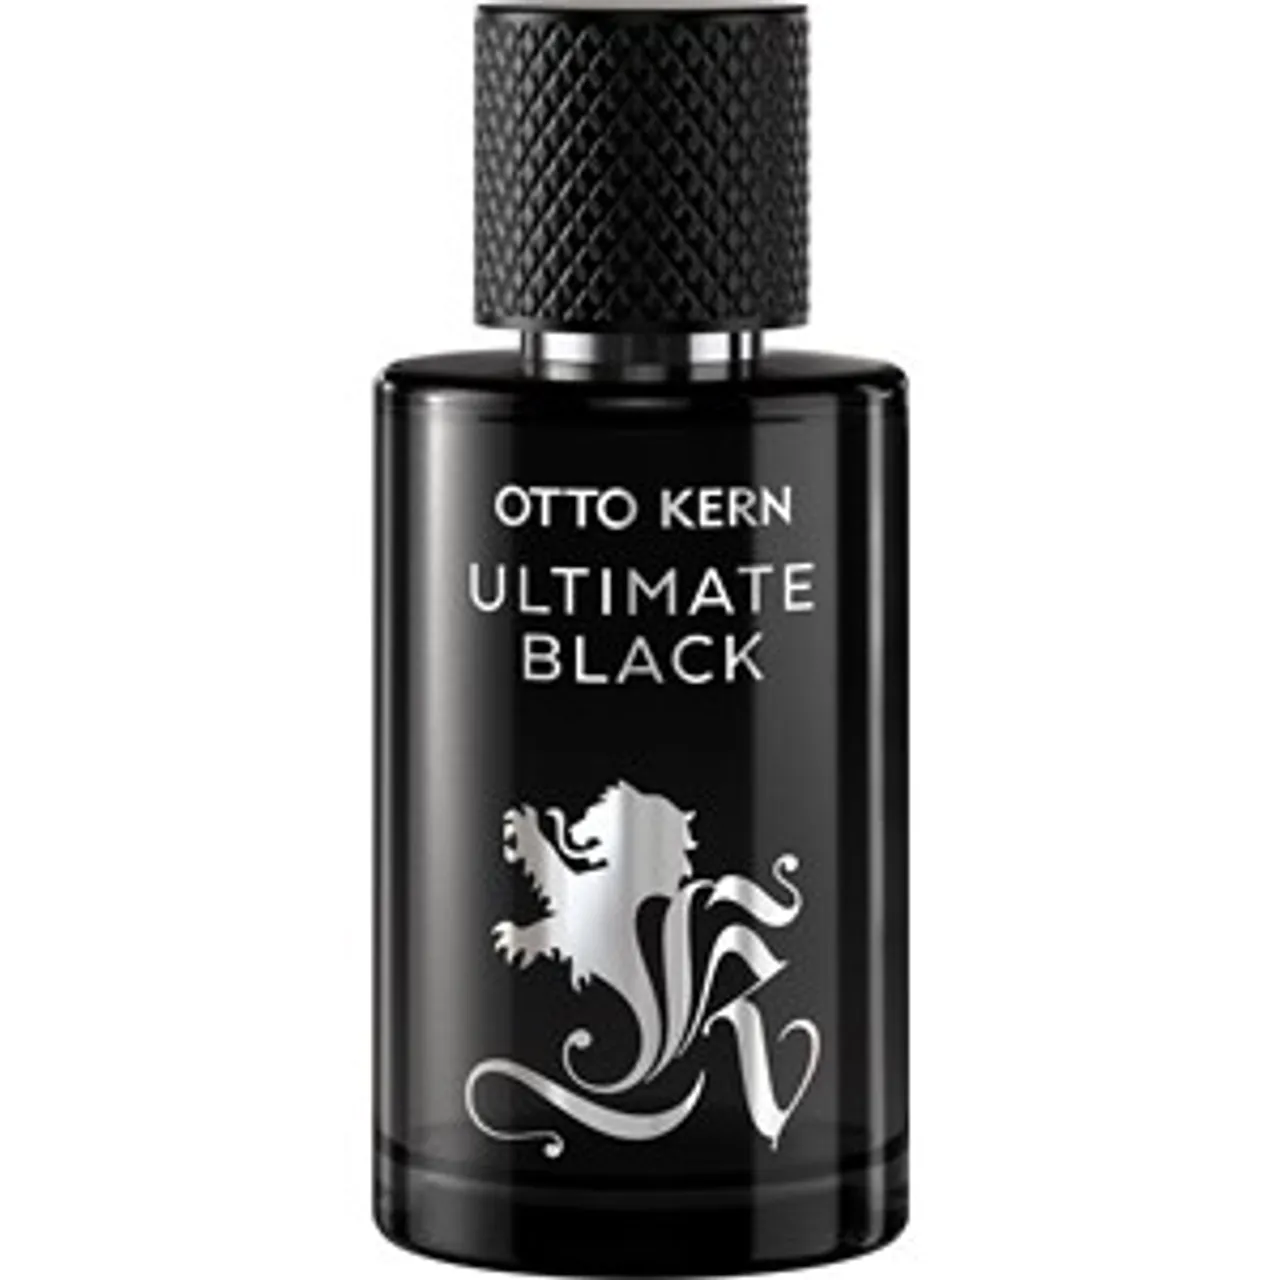 Otto Kern Ultimate Black Eau de Toilette Spray Parfum Herren